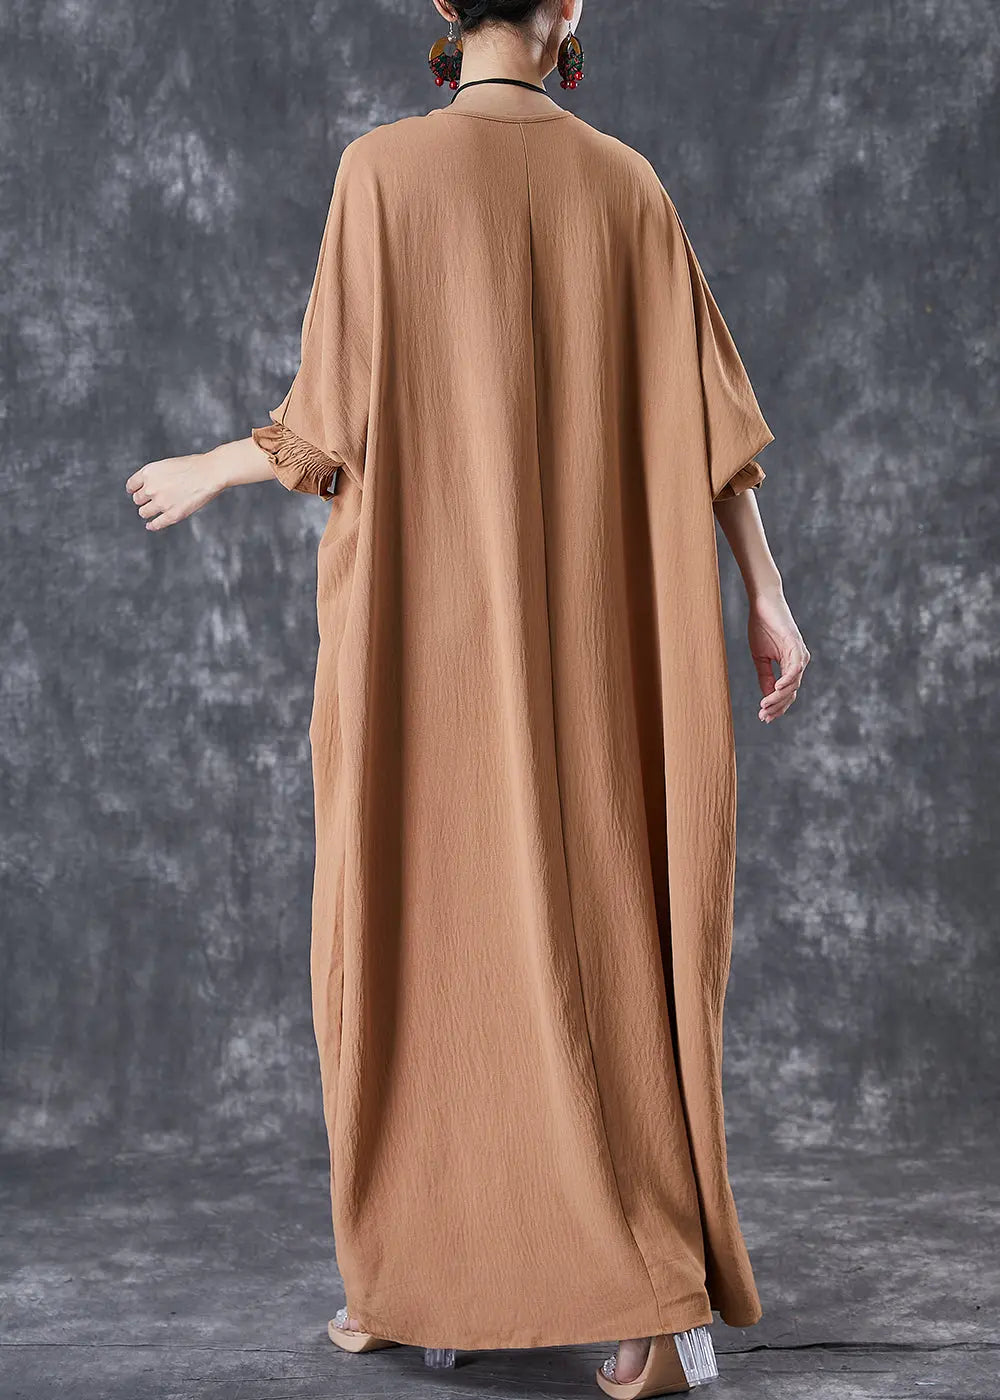 Khaki Cotton Holiday Dress Oversized Batwing Sleeve Ada Fashion